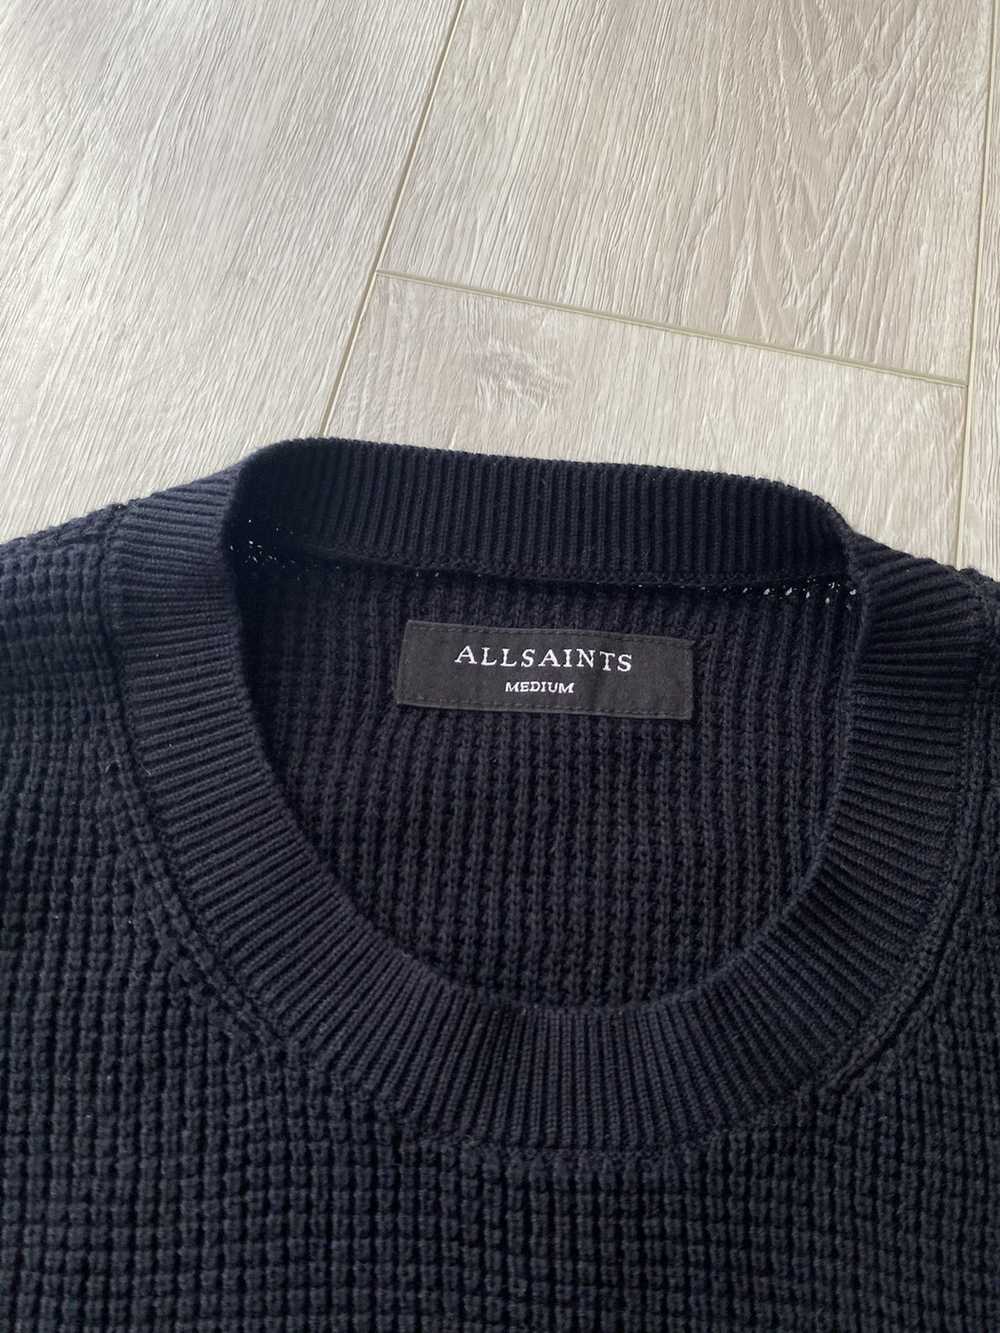 Allsaints ALLSAINTS Waffle Knit Black Sweatshirt - image 4